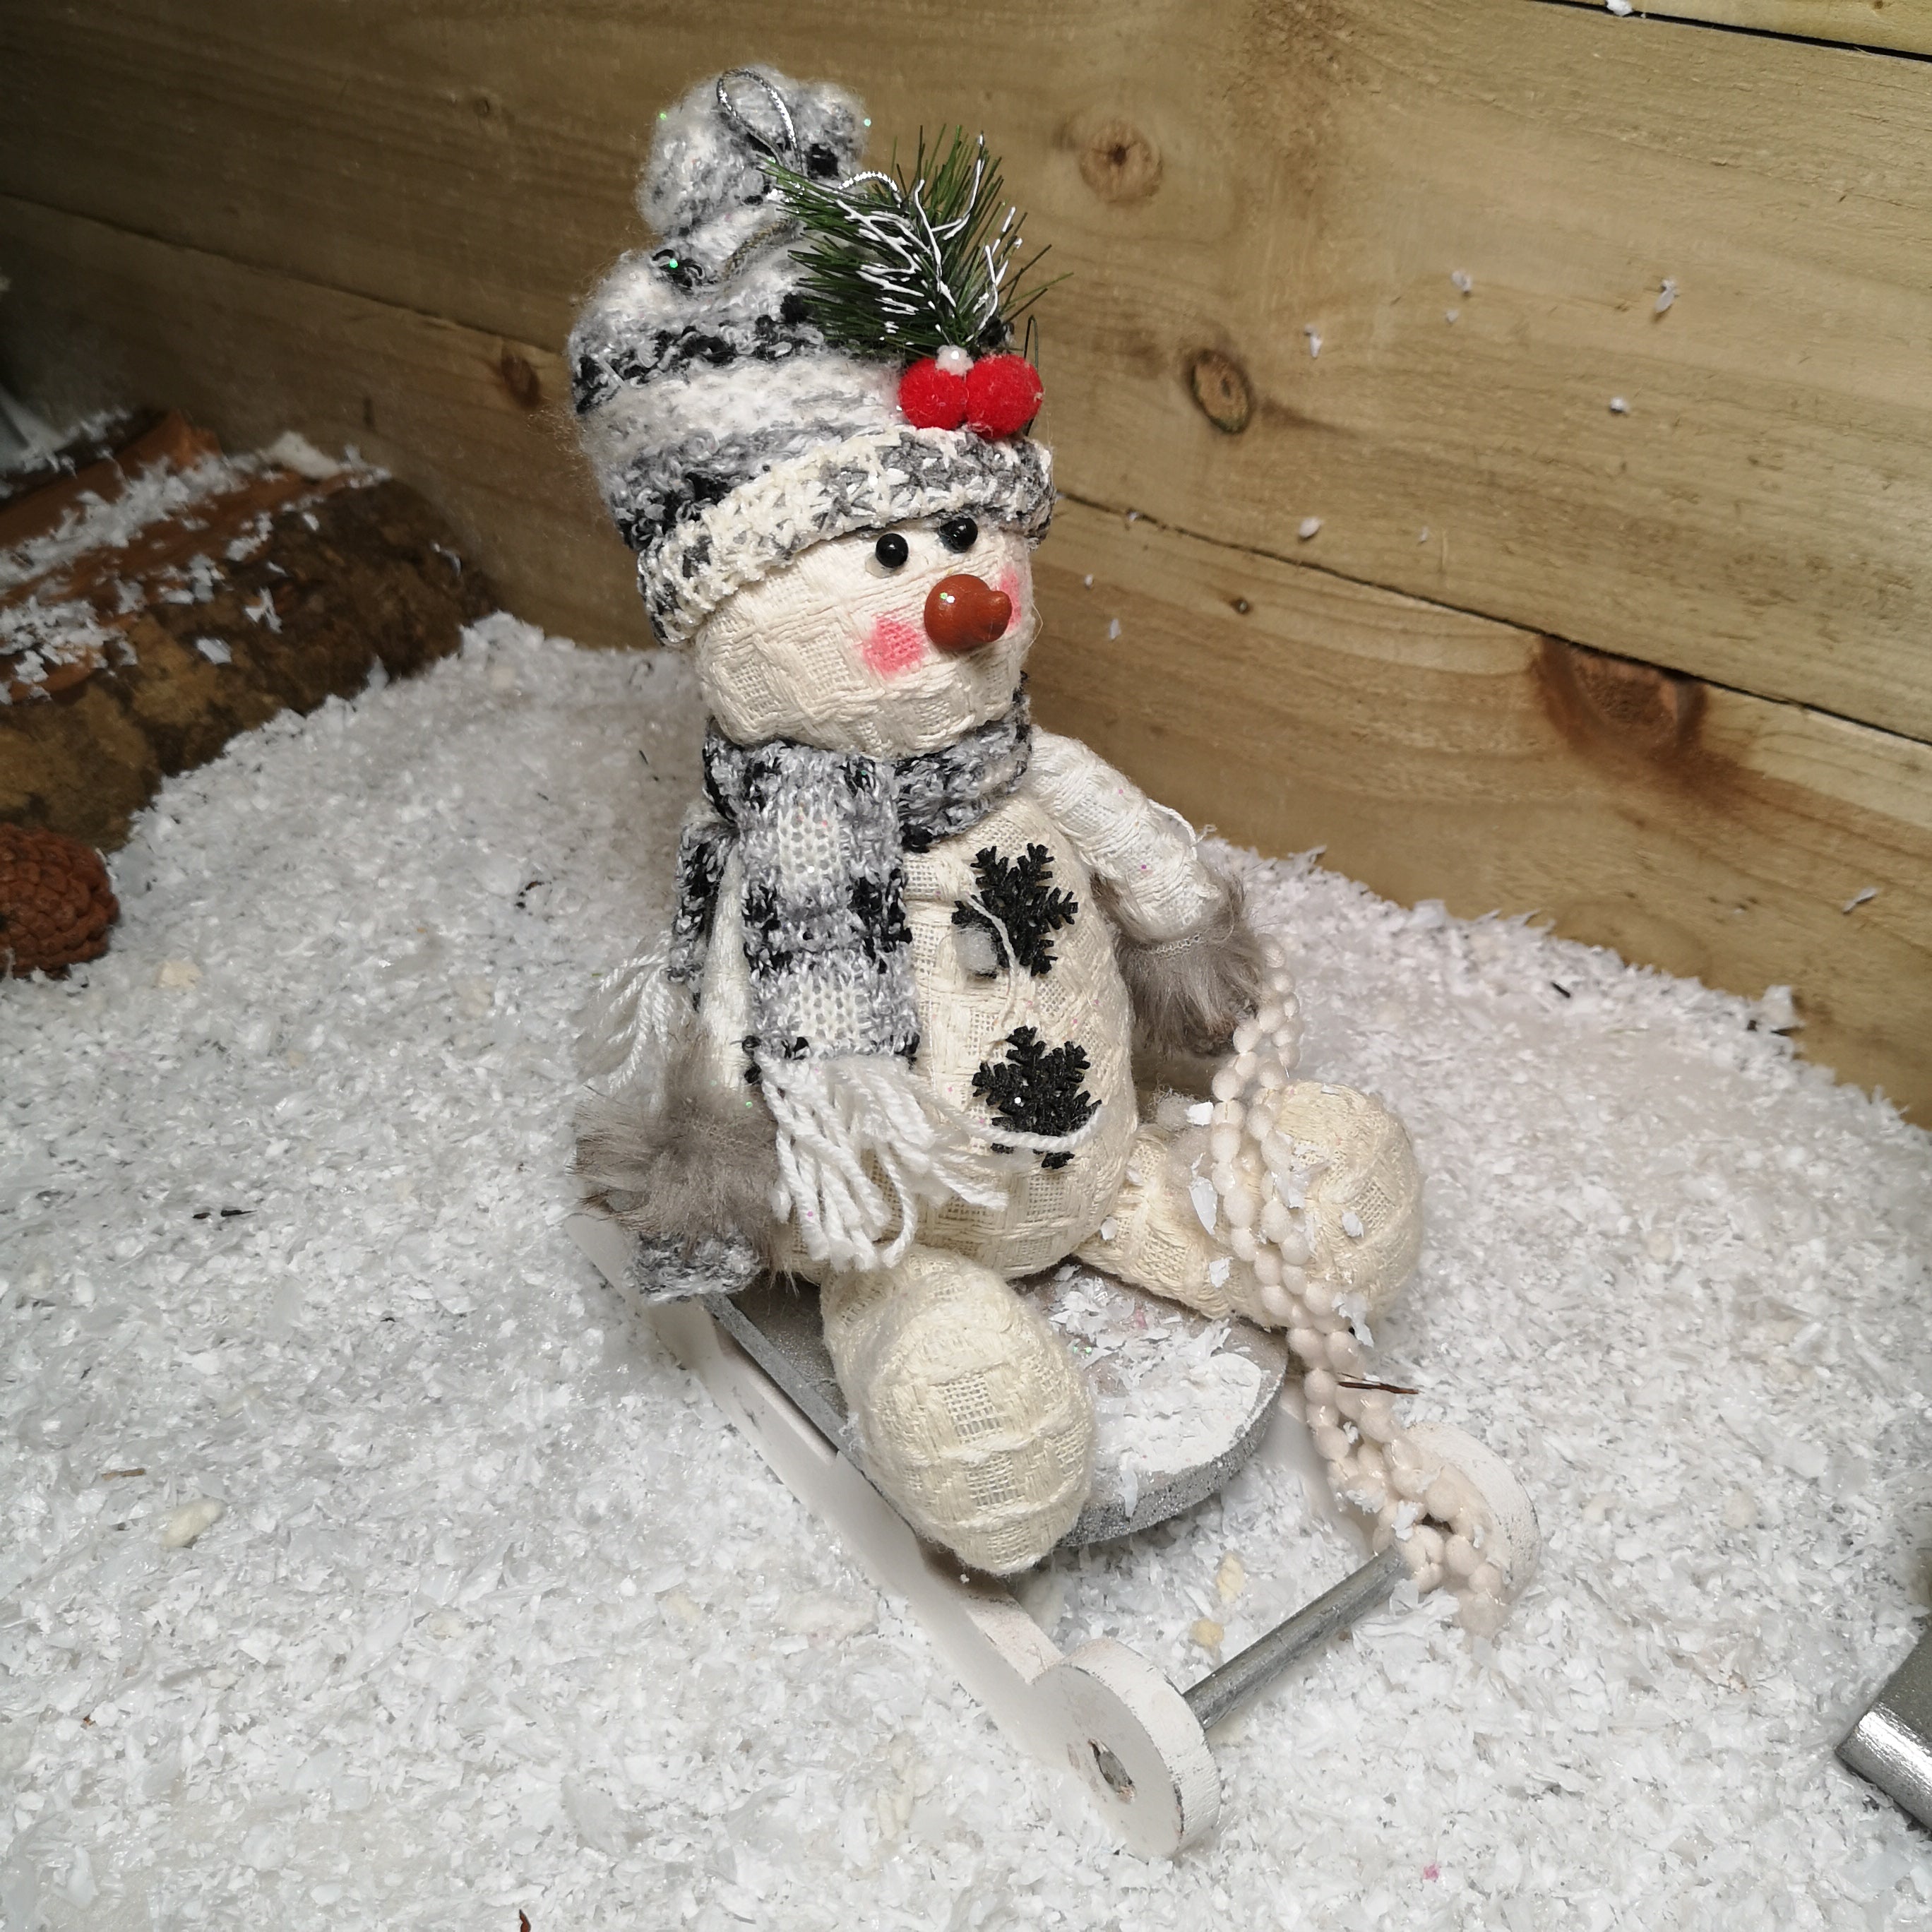 25cm Plush Christmas Snowman on Wooden Sledge Decoration